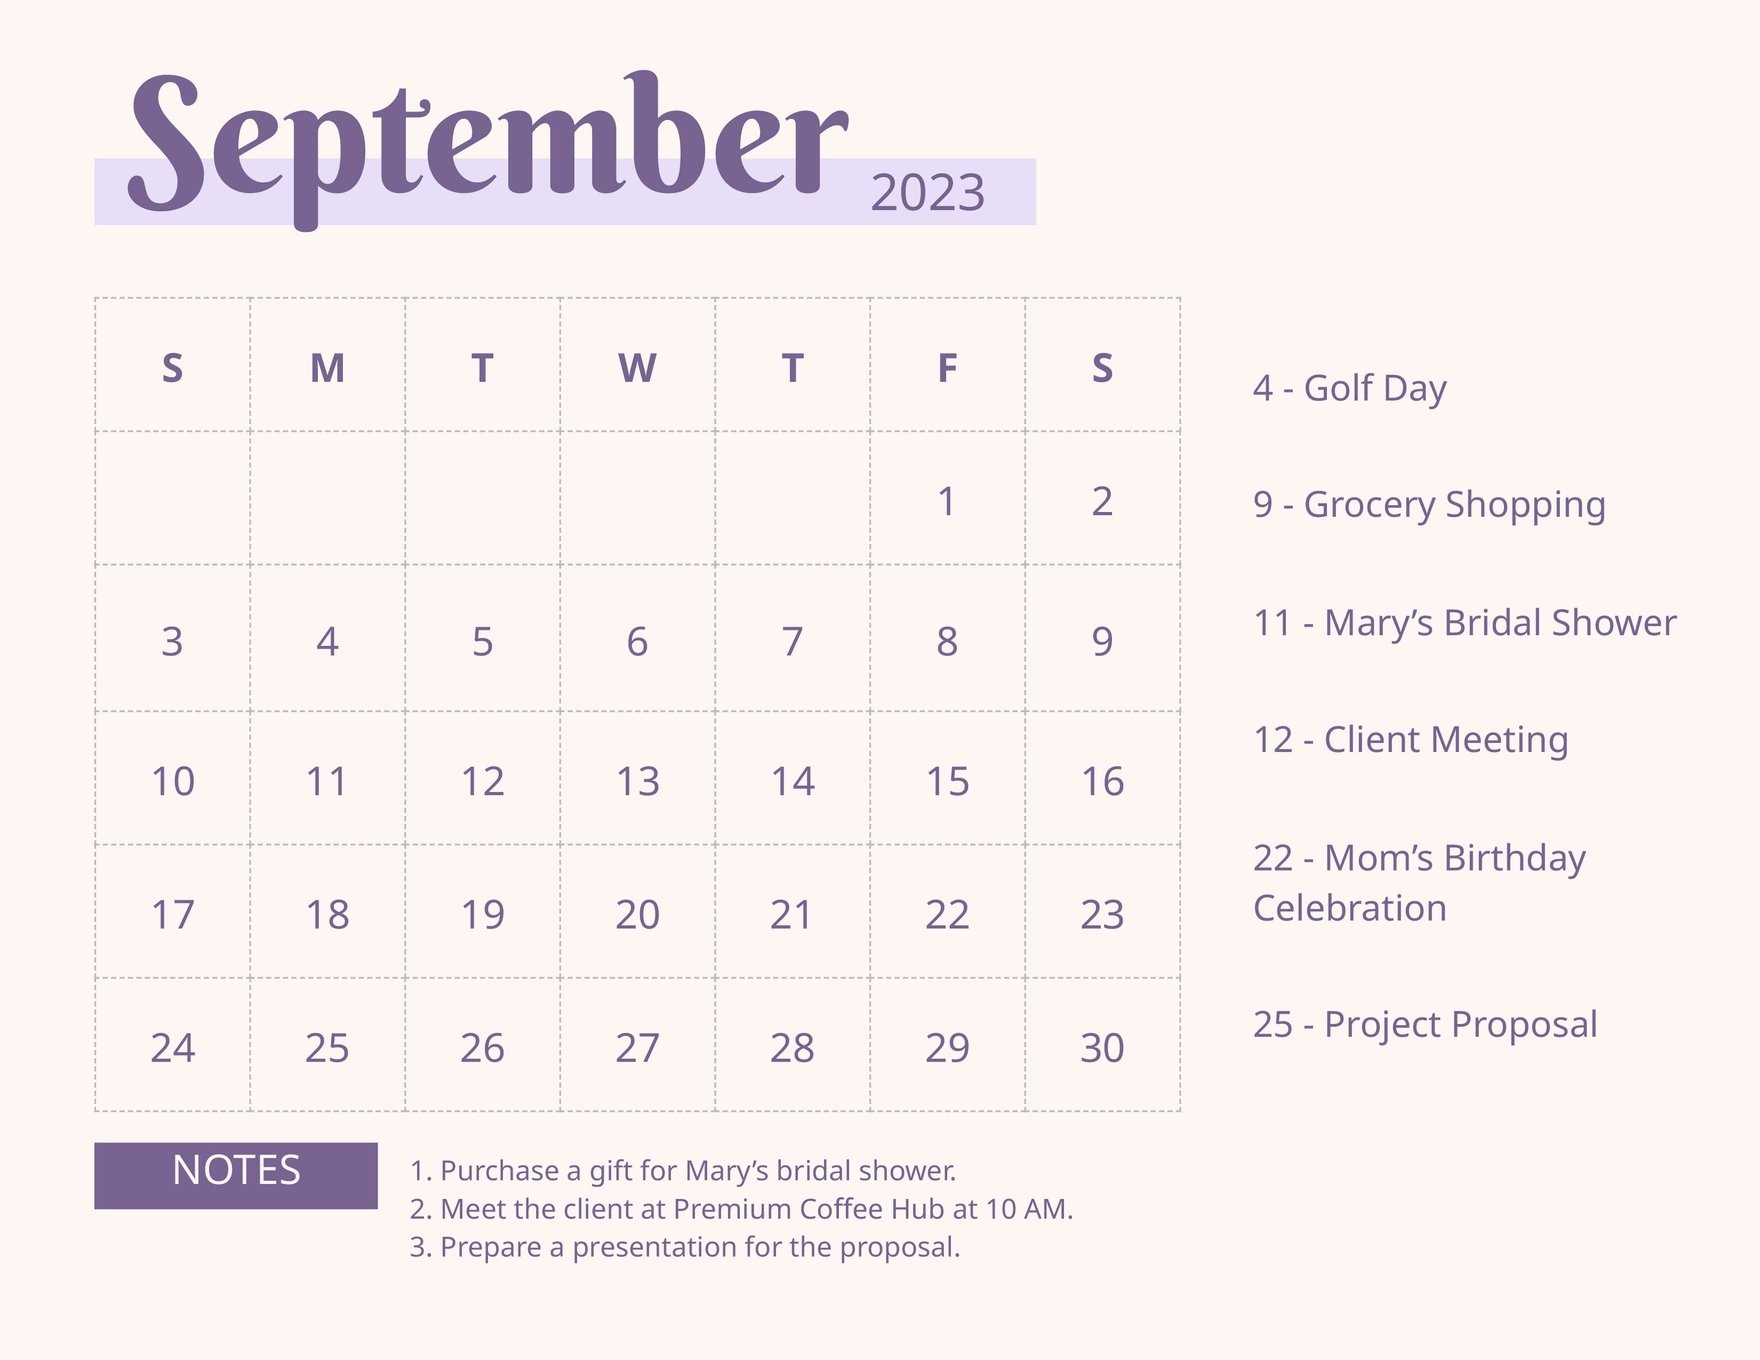 September 2023 Monthly Calendar Template in Word, Google Docs, Excel, Google Sheets, Illustrator, EPS, SVG, JPG